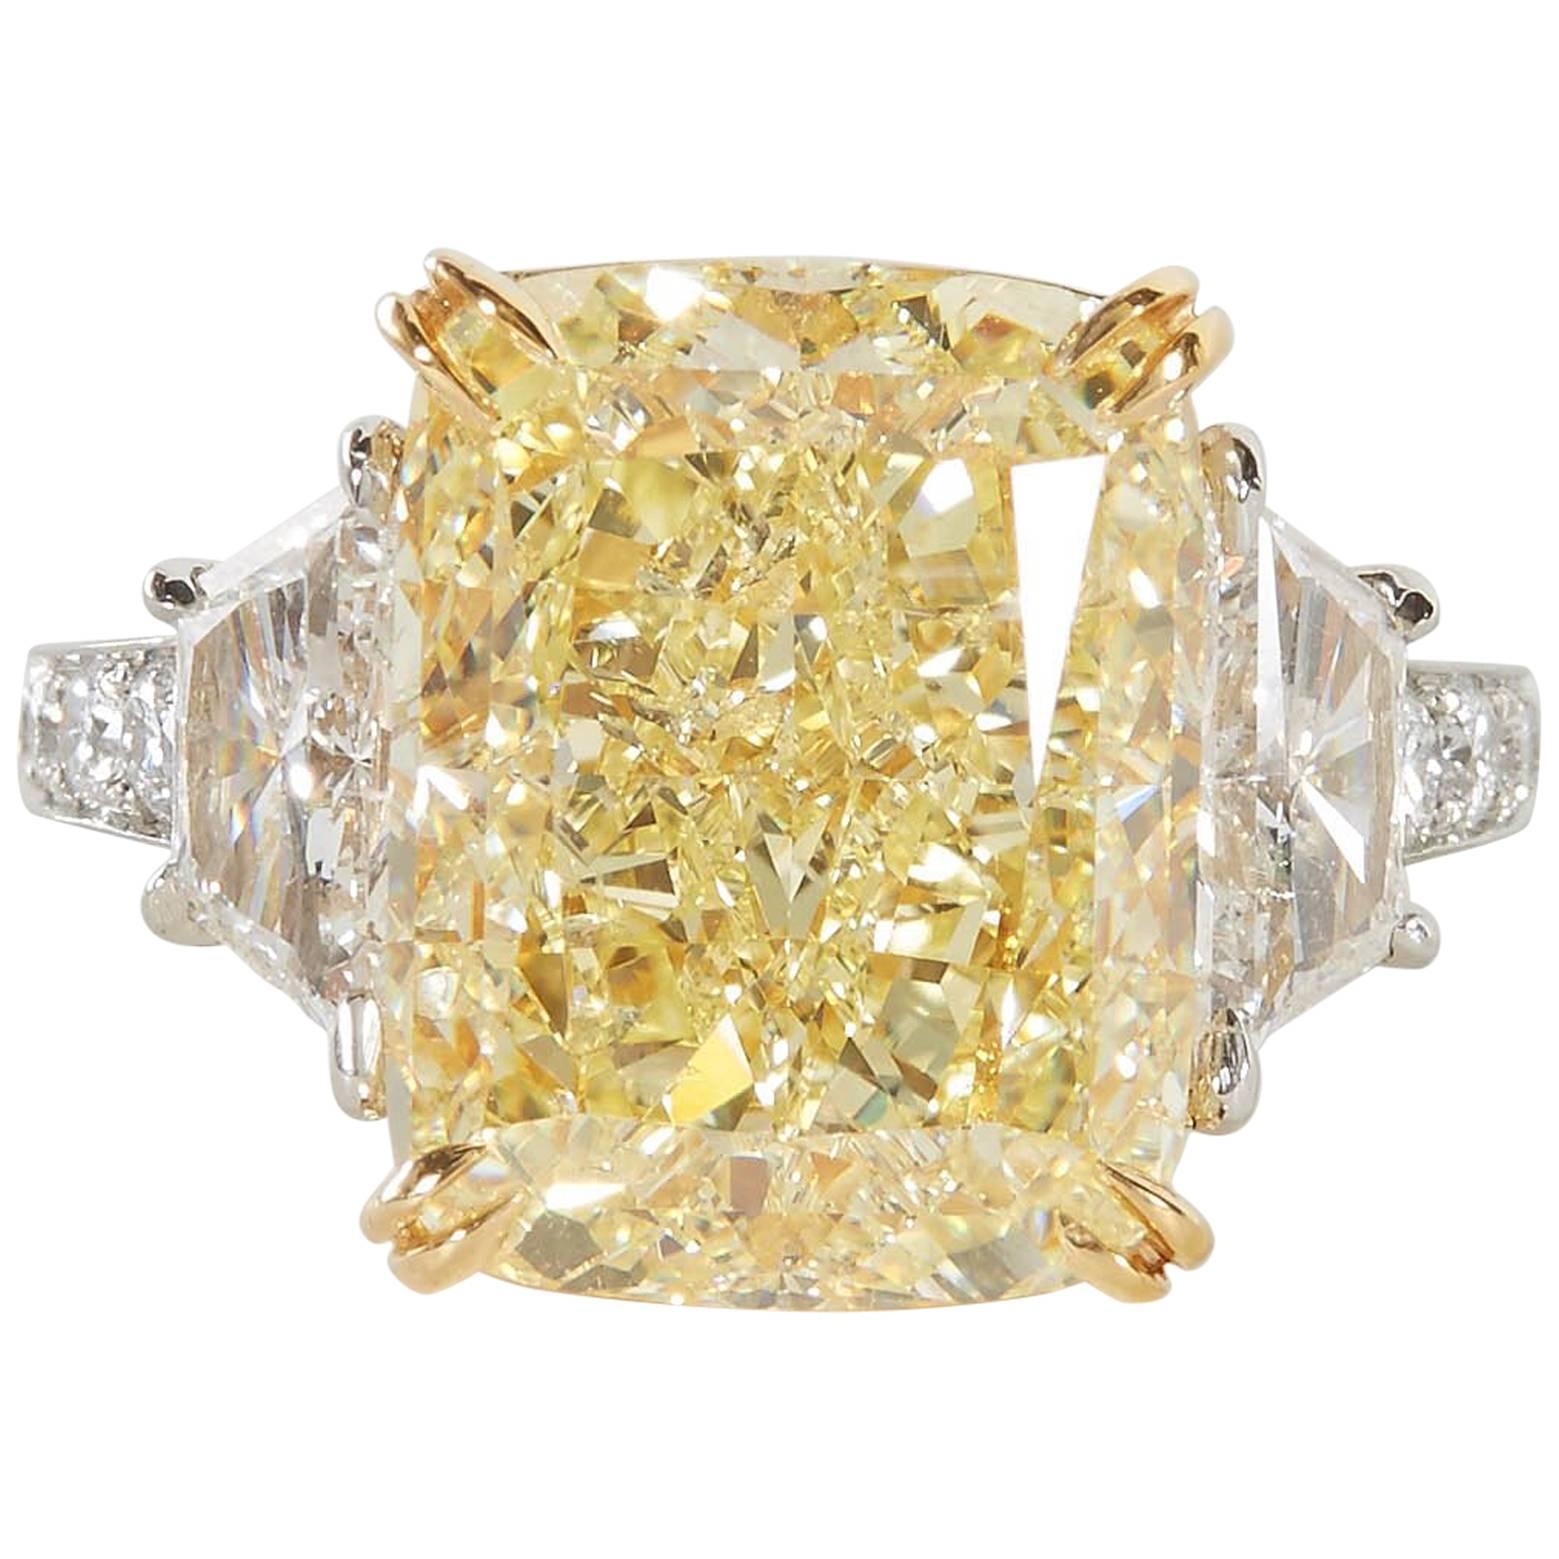 10 carat Fancy Yellow GIA Diamond Ring For Sale